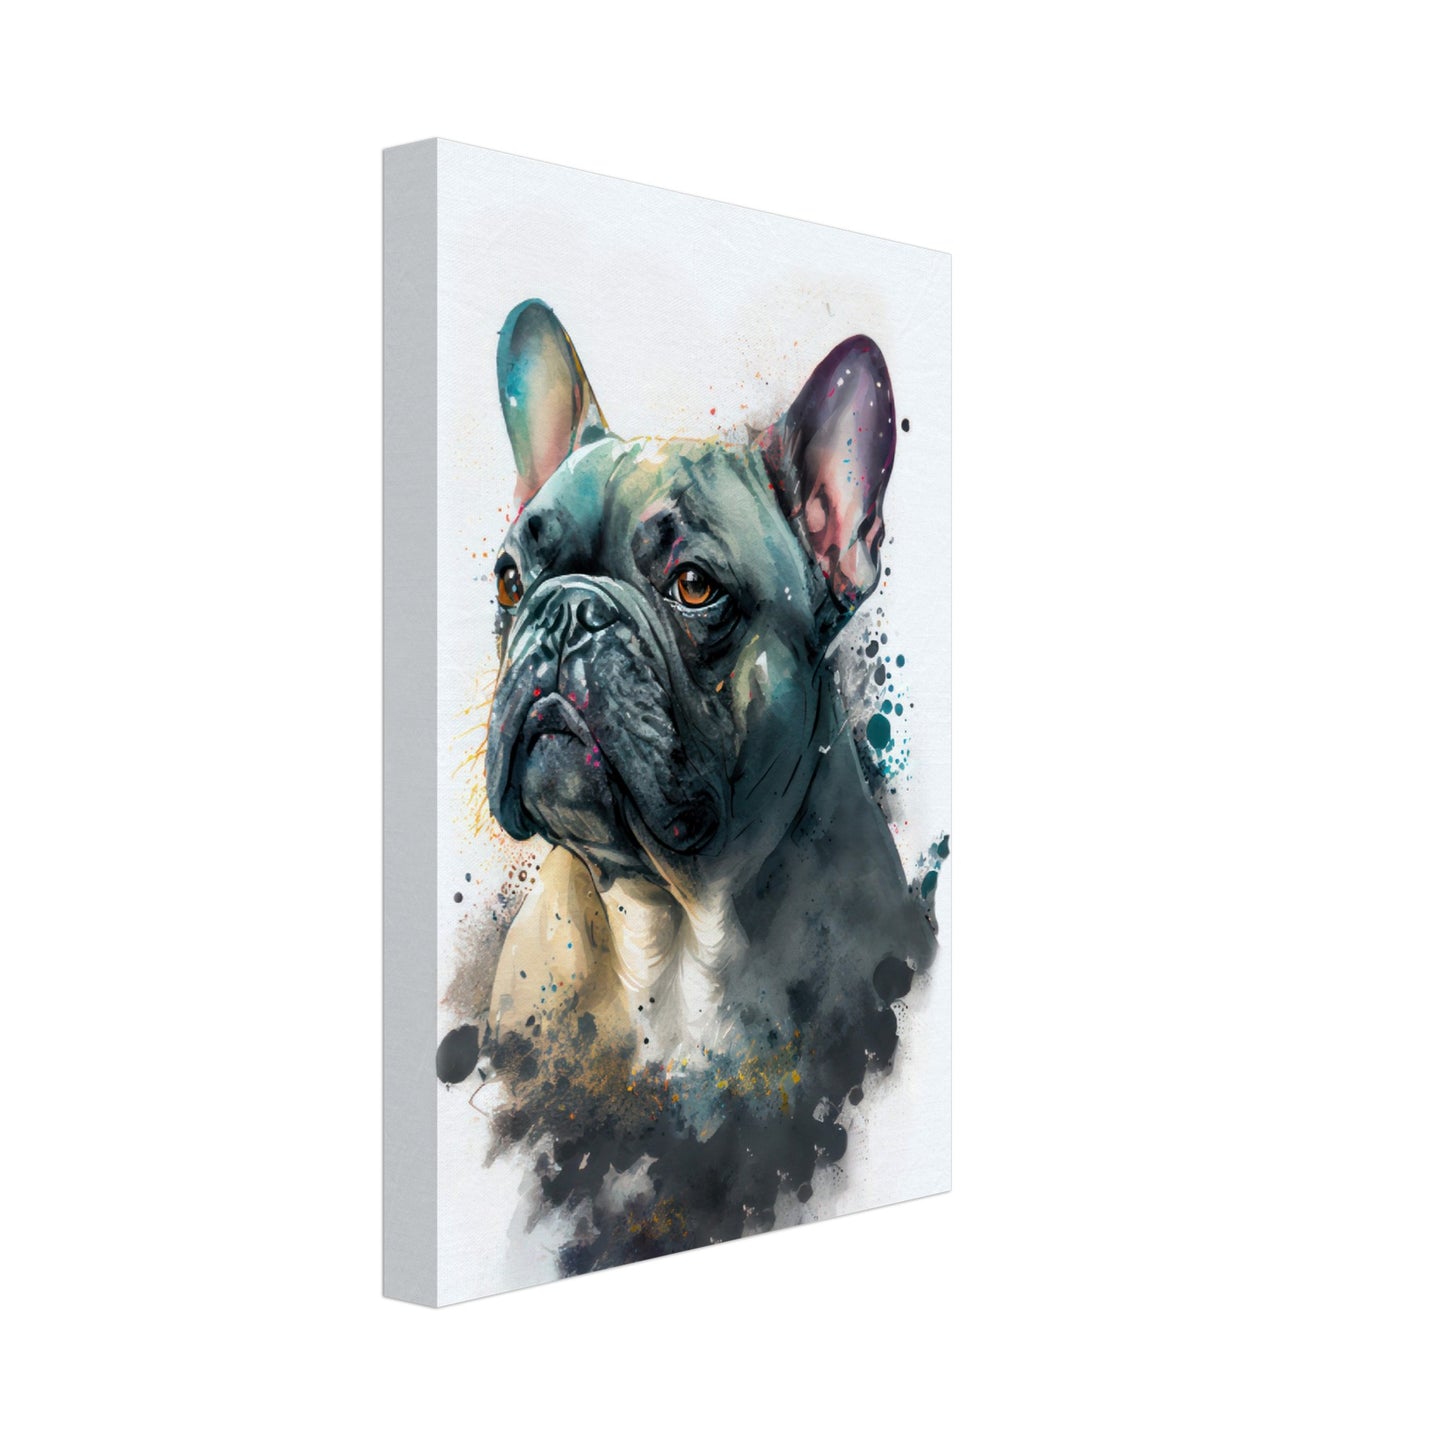 Französische Bulldoge Milo - Hunde Wandbild - Dogs Art Leinwand WaterColors im Hochformat - Hundebilder Hundeportrait Tiere Tierbilder Kunstdruck Aquarell